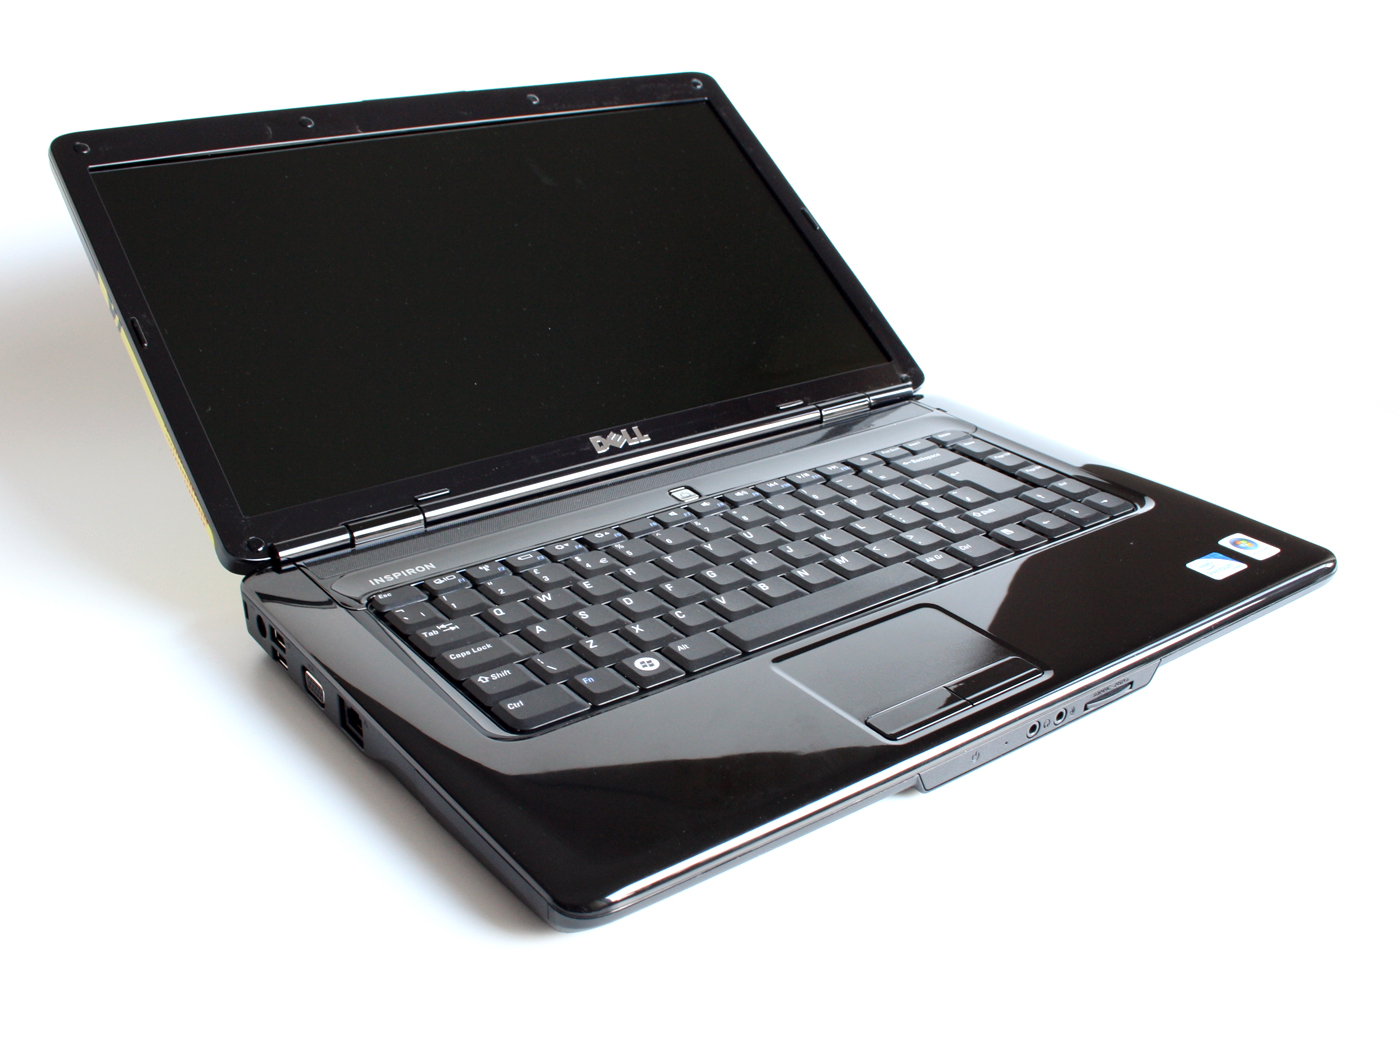 Dell Inspiron Laptop Dell Inspiron 1545 Notebookcheck net External Reviews